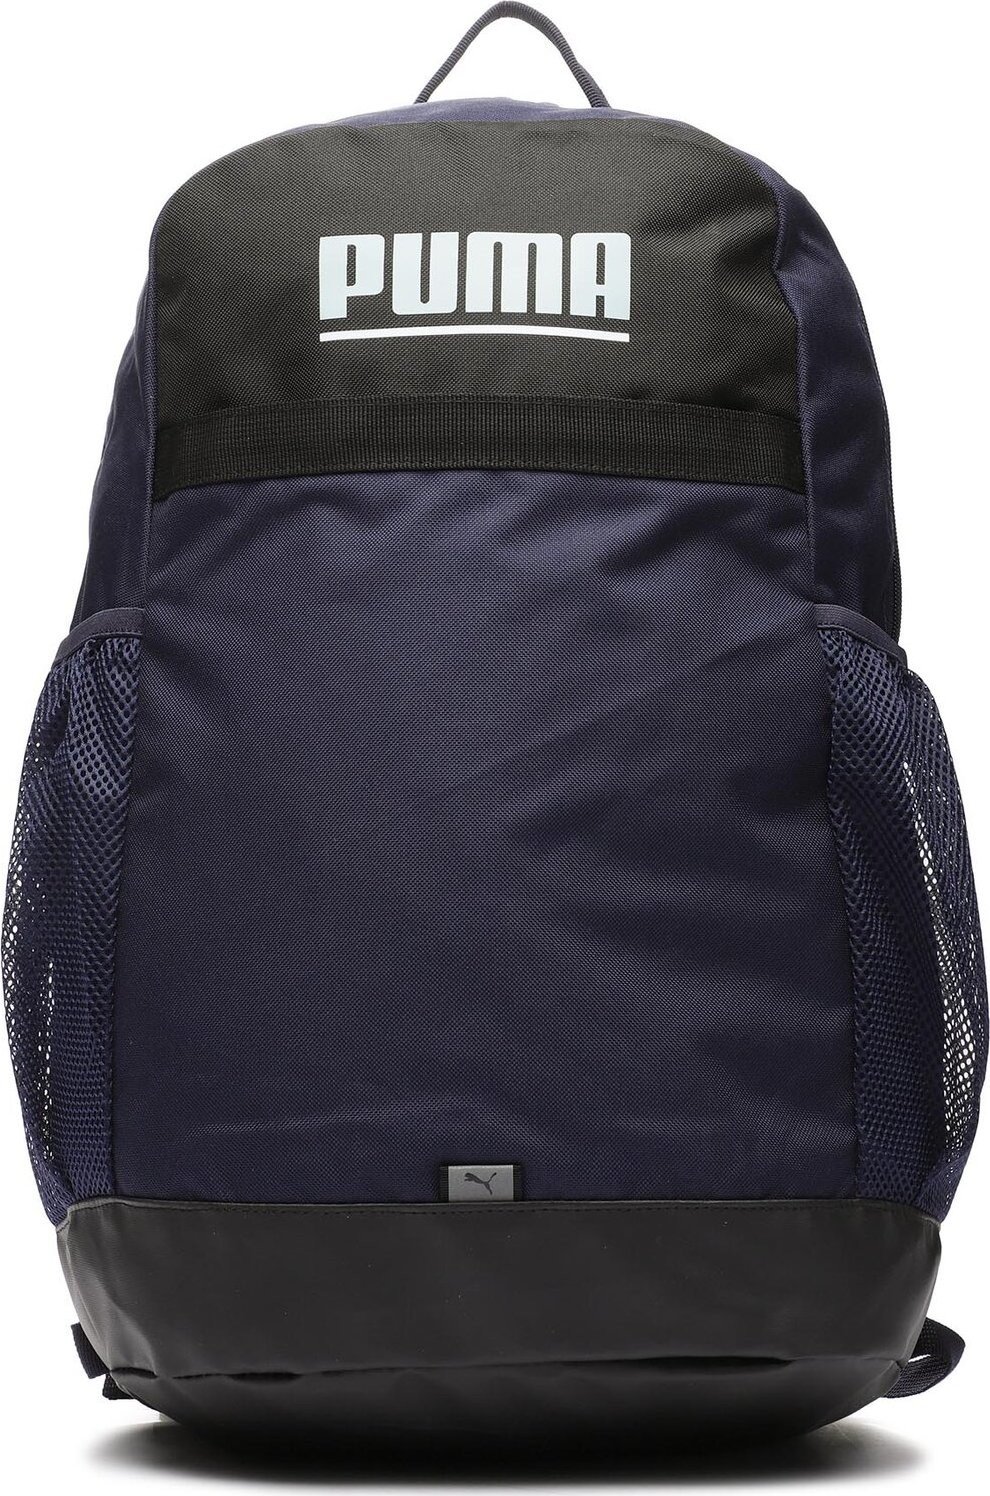 Batoh Puma Plus Backpack 079615 05 Puma Navy